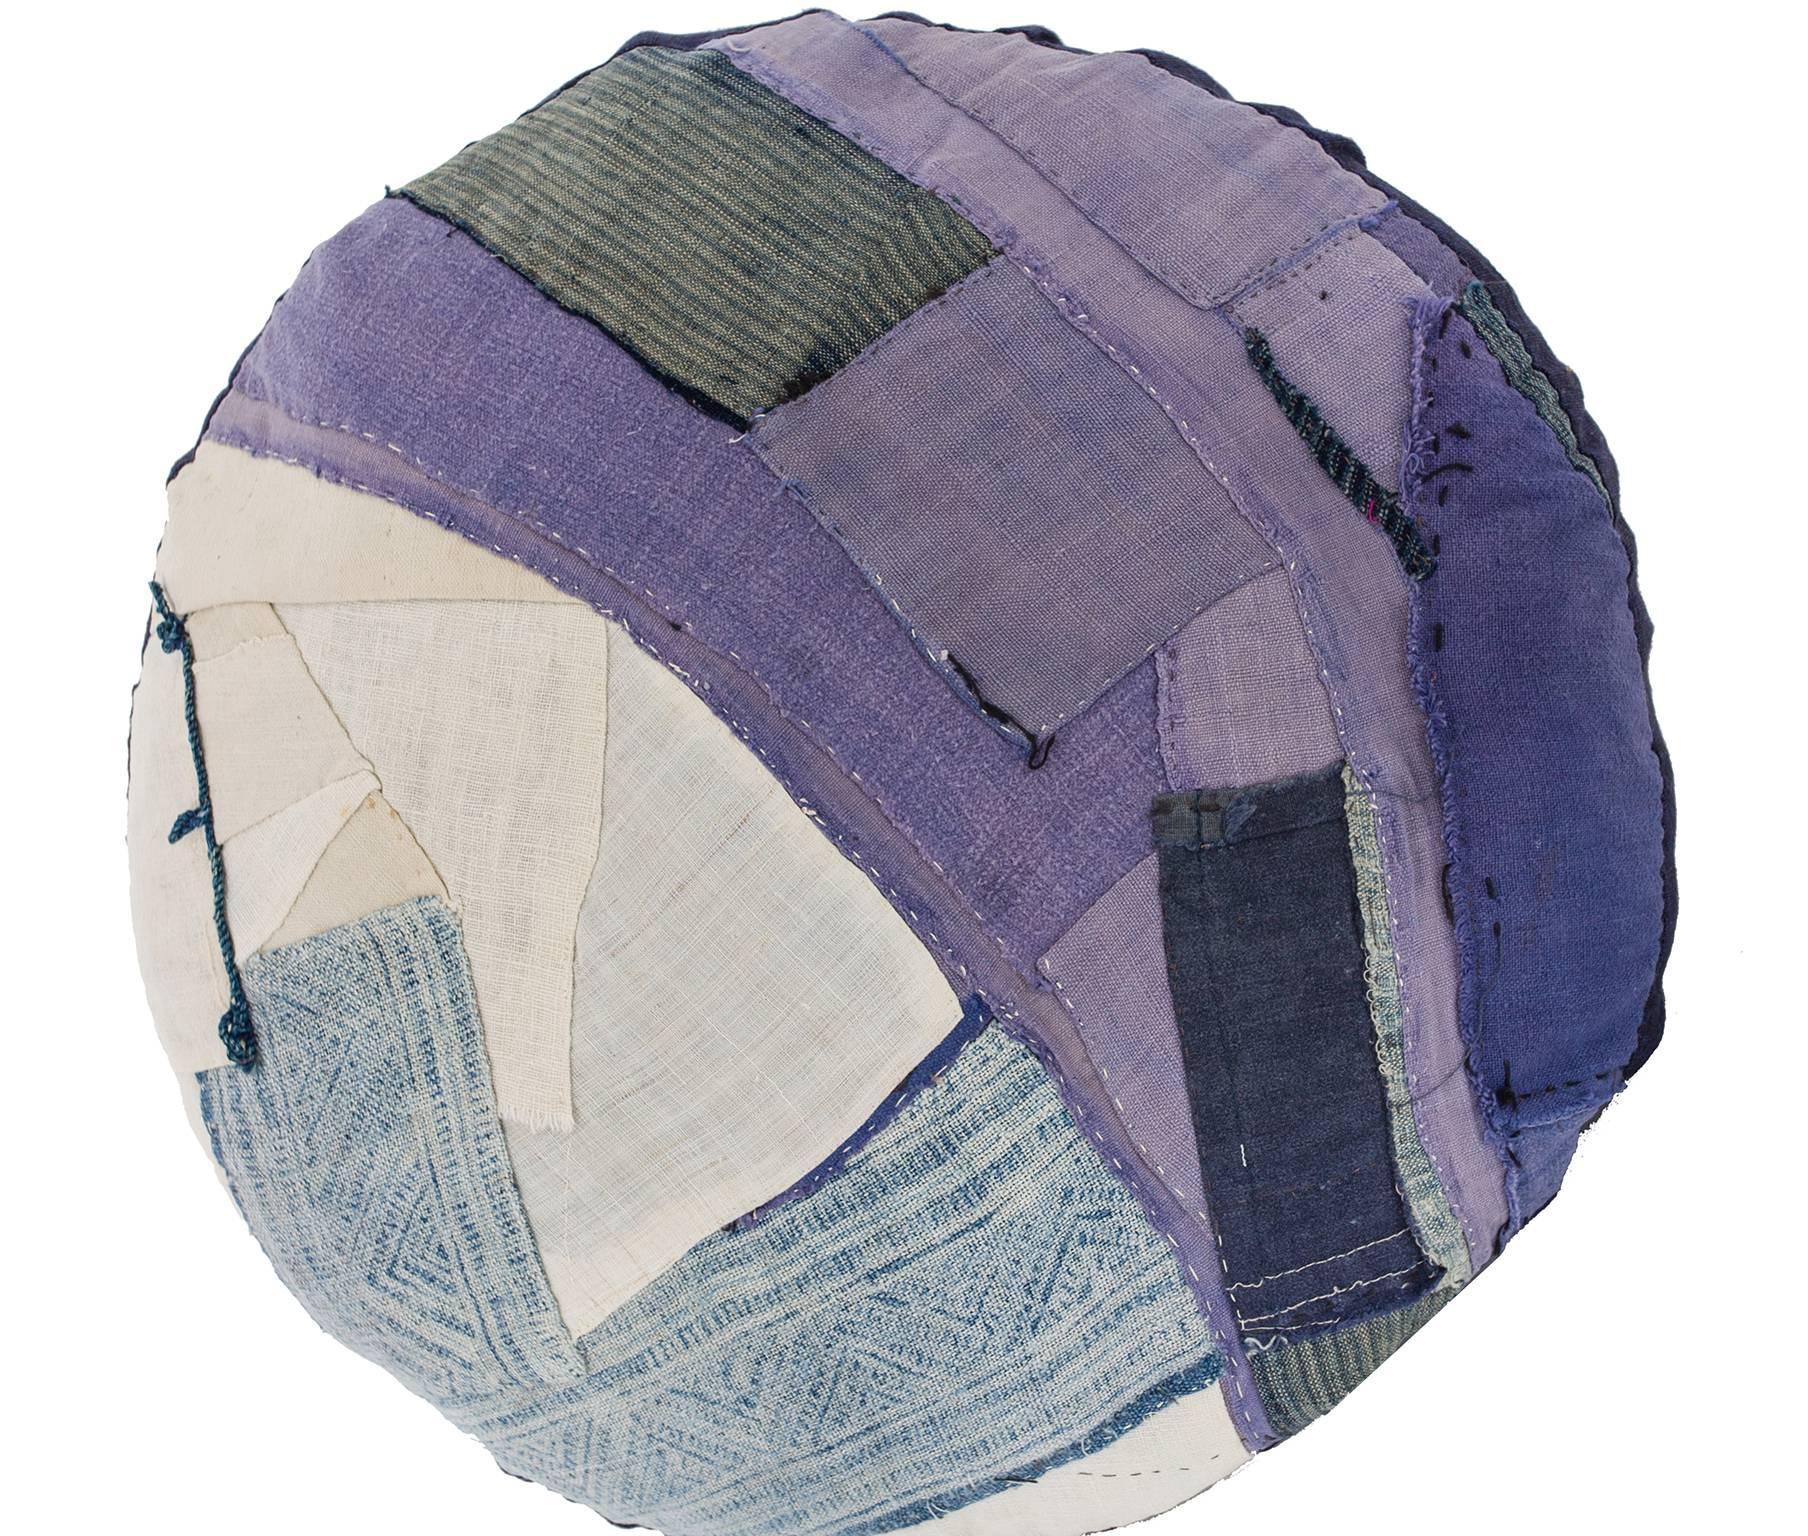 Boro Style Moon Phase, Round Cushion, Indigo and Resit Dye Pillow For Sale 2